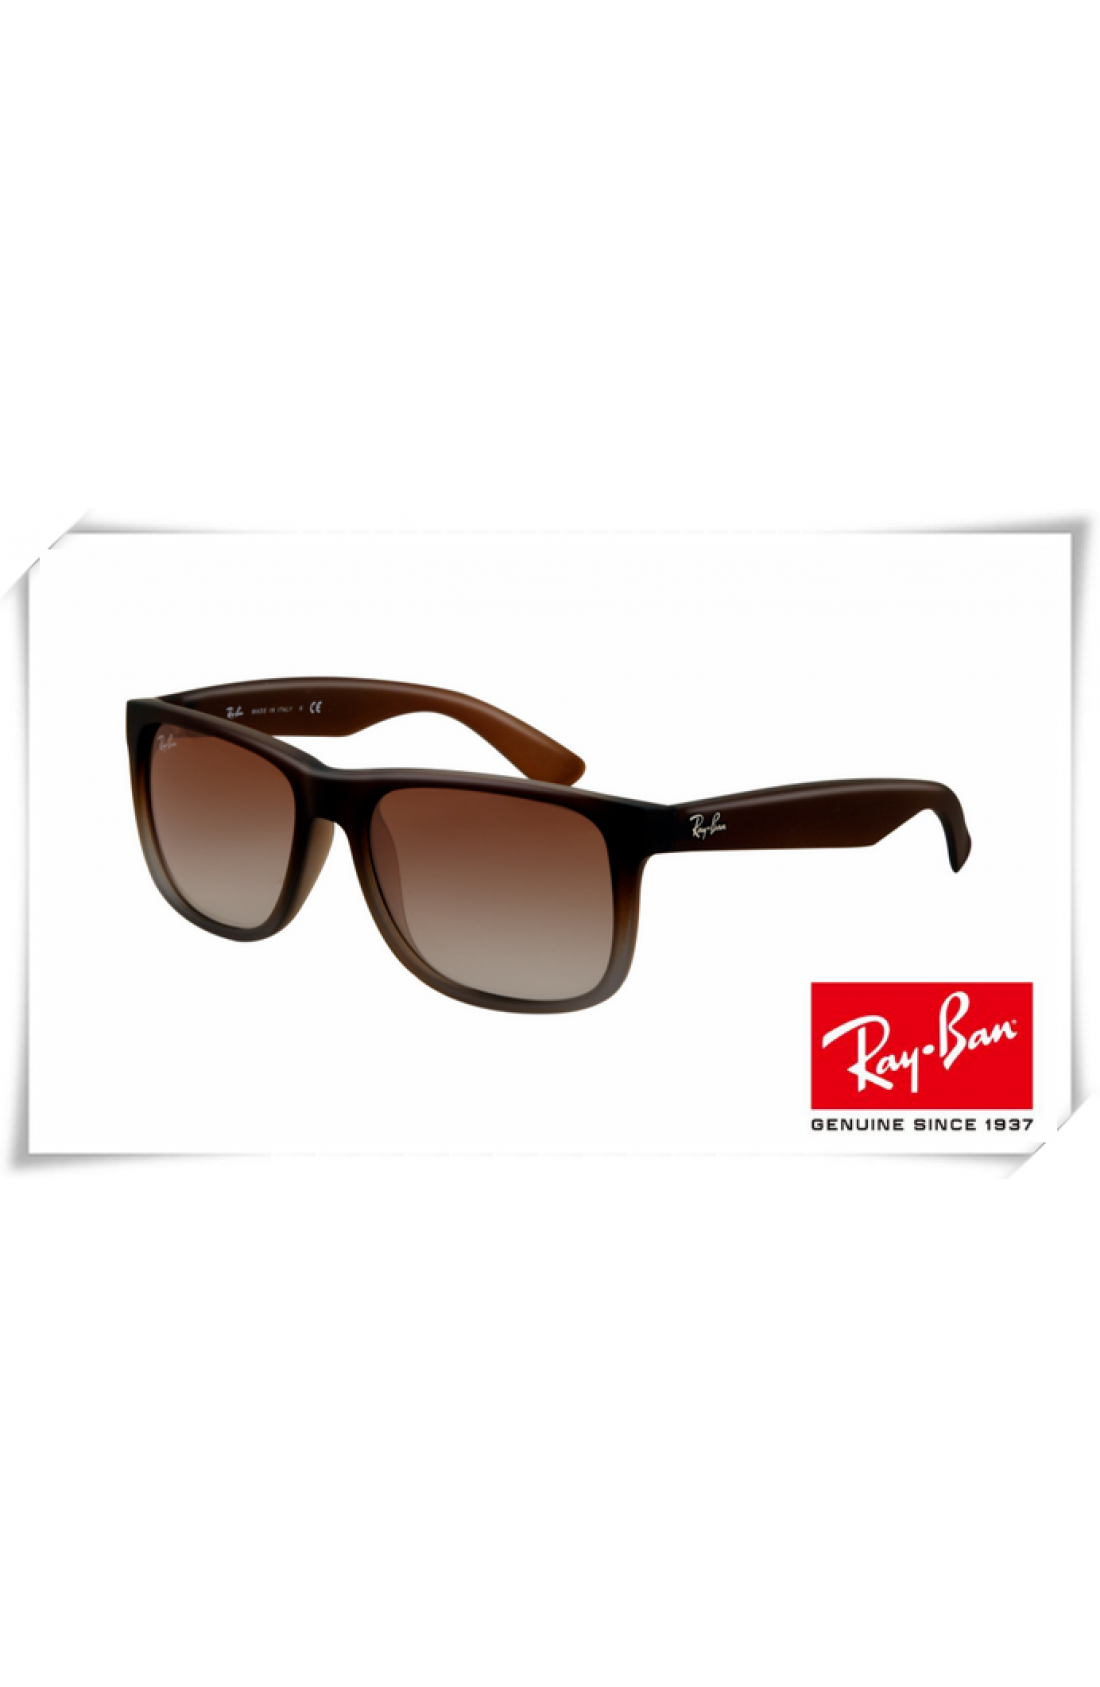 ray ban sunglasses genuine since 1937